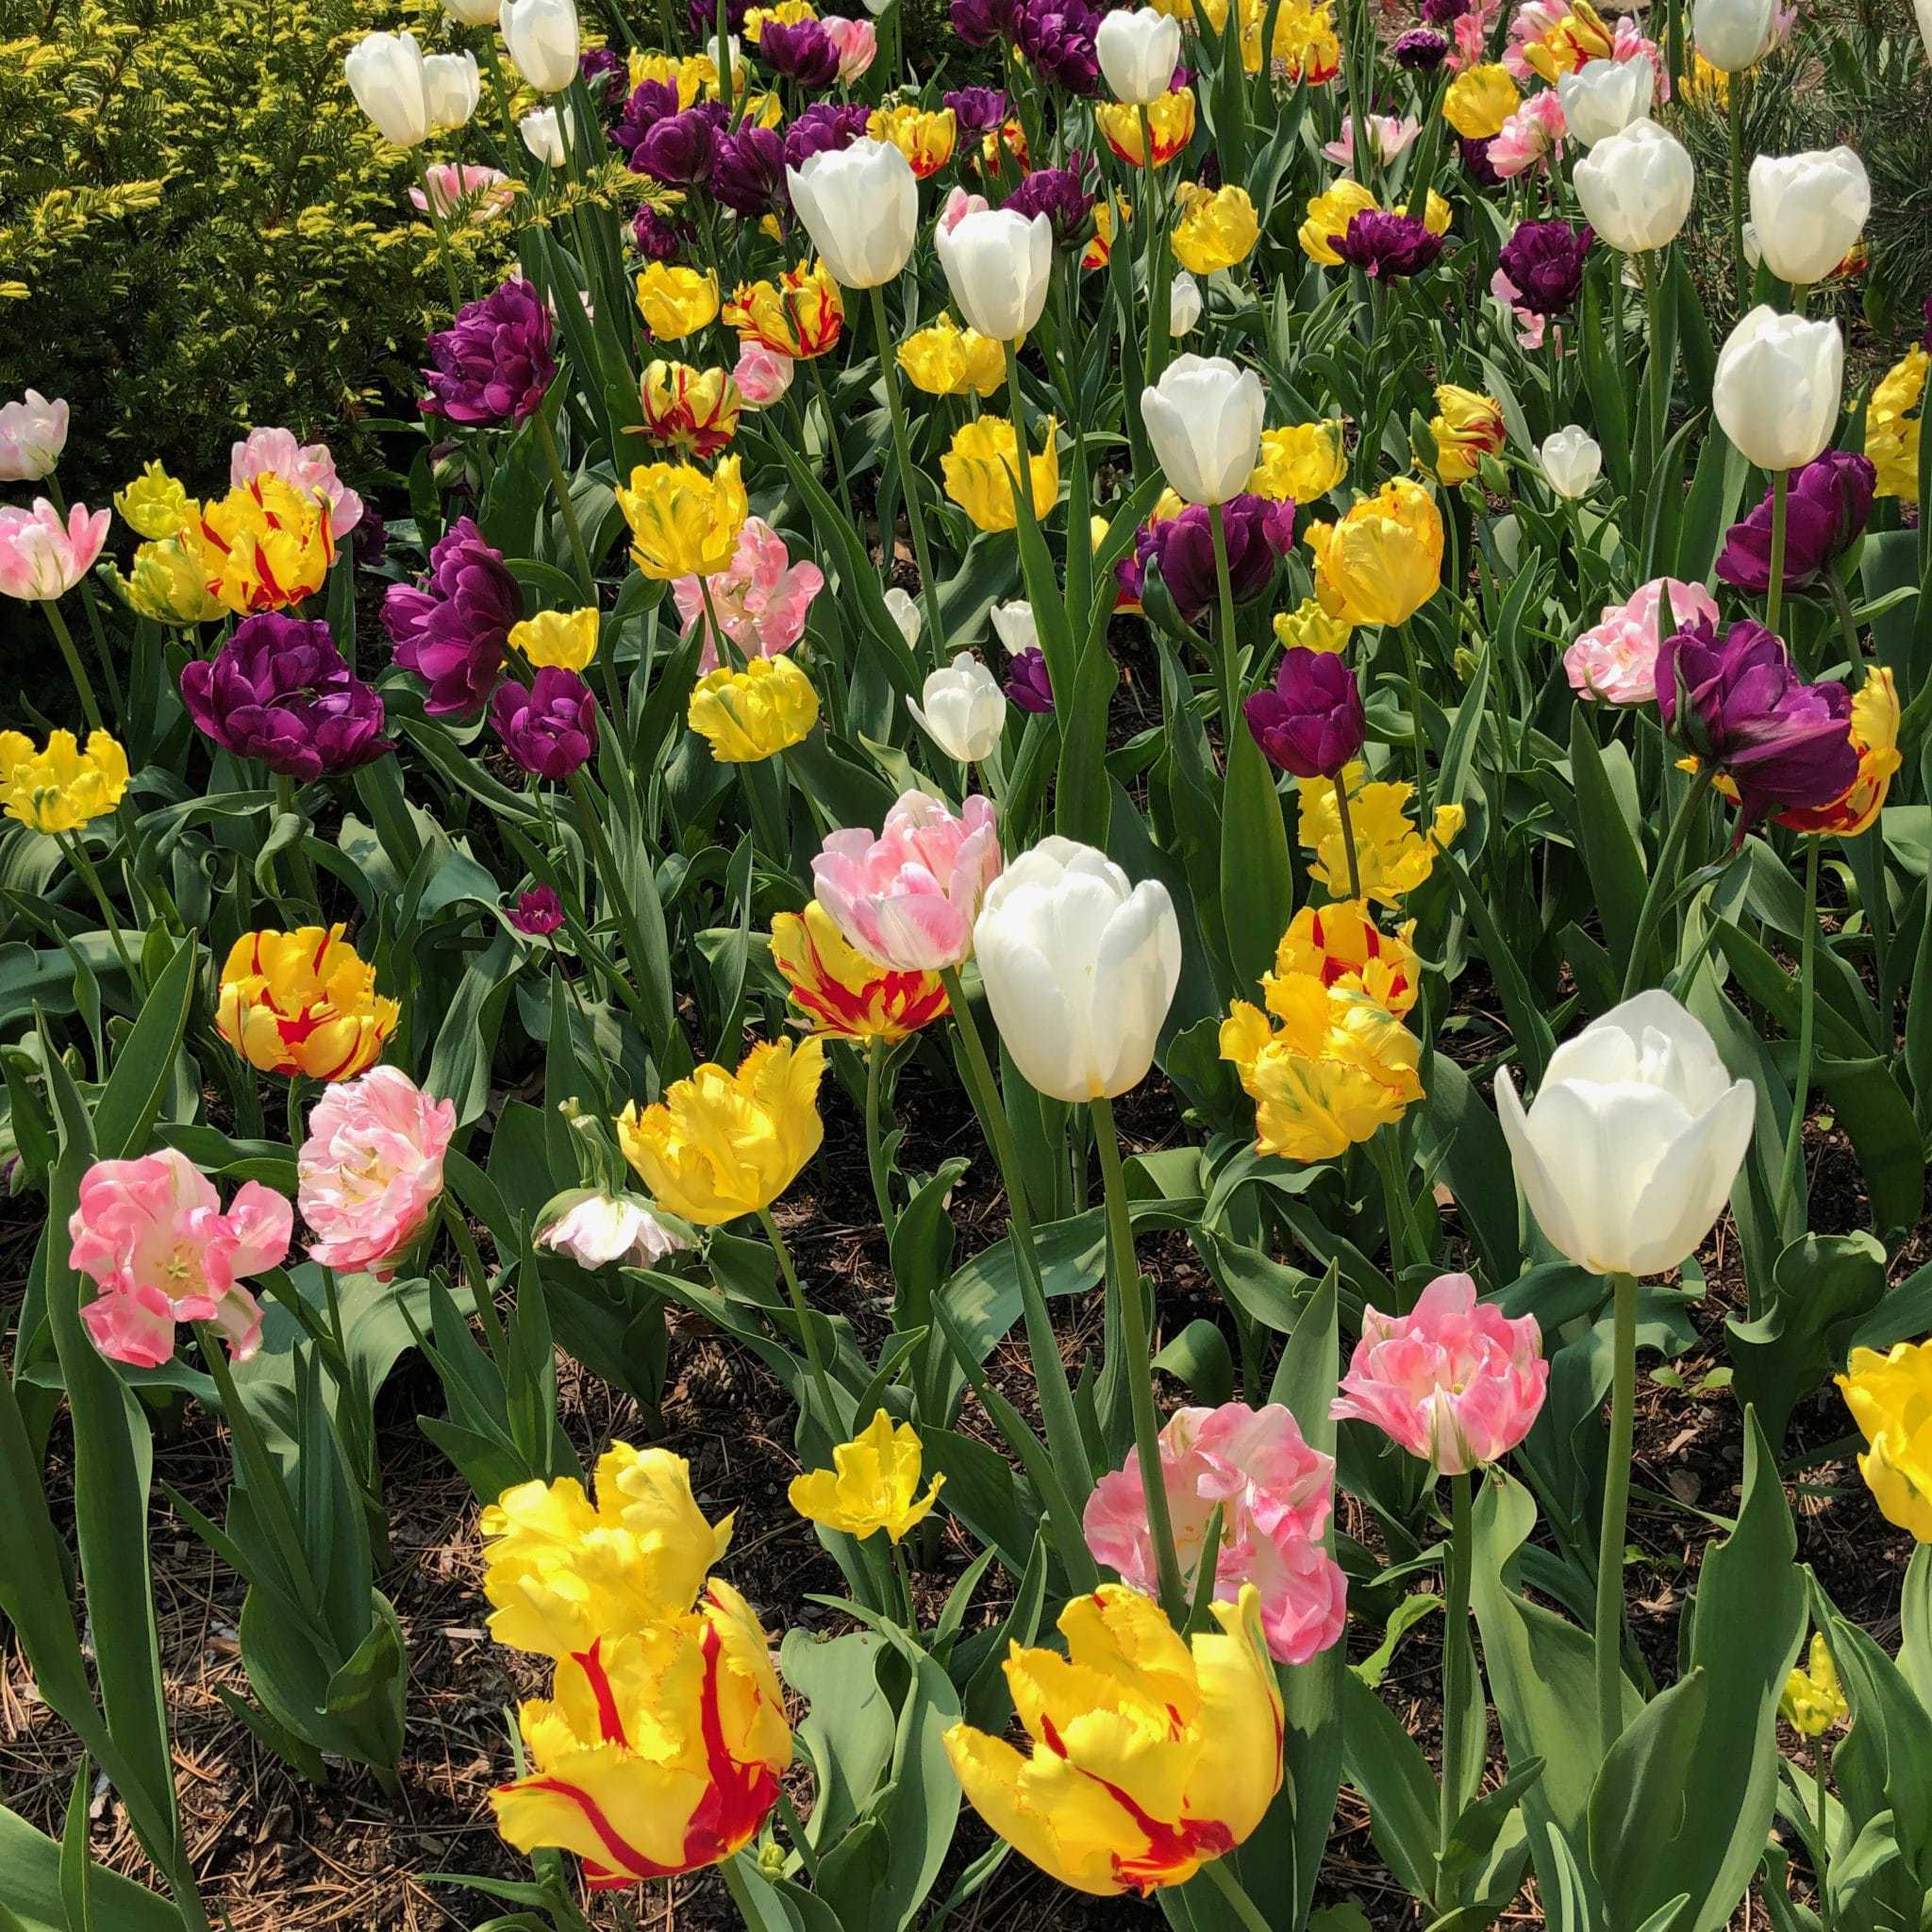 Tulips at the Royal Botanical Gardens in Hamilton, Ontario